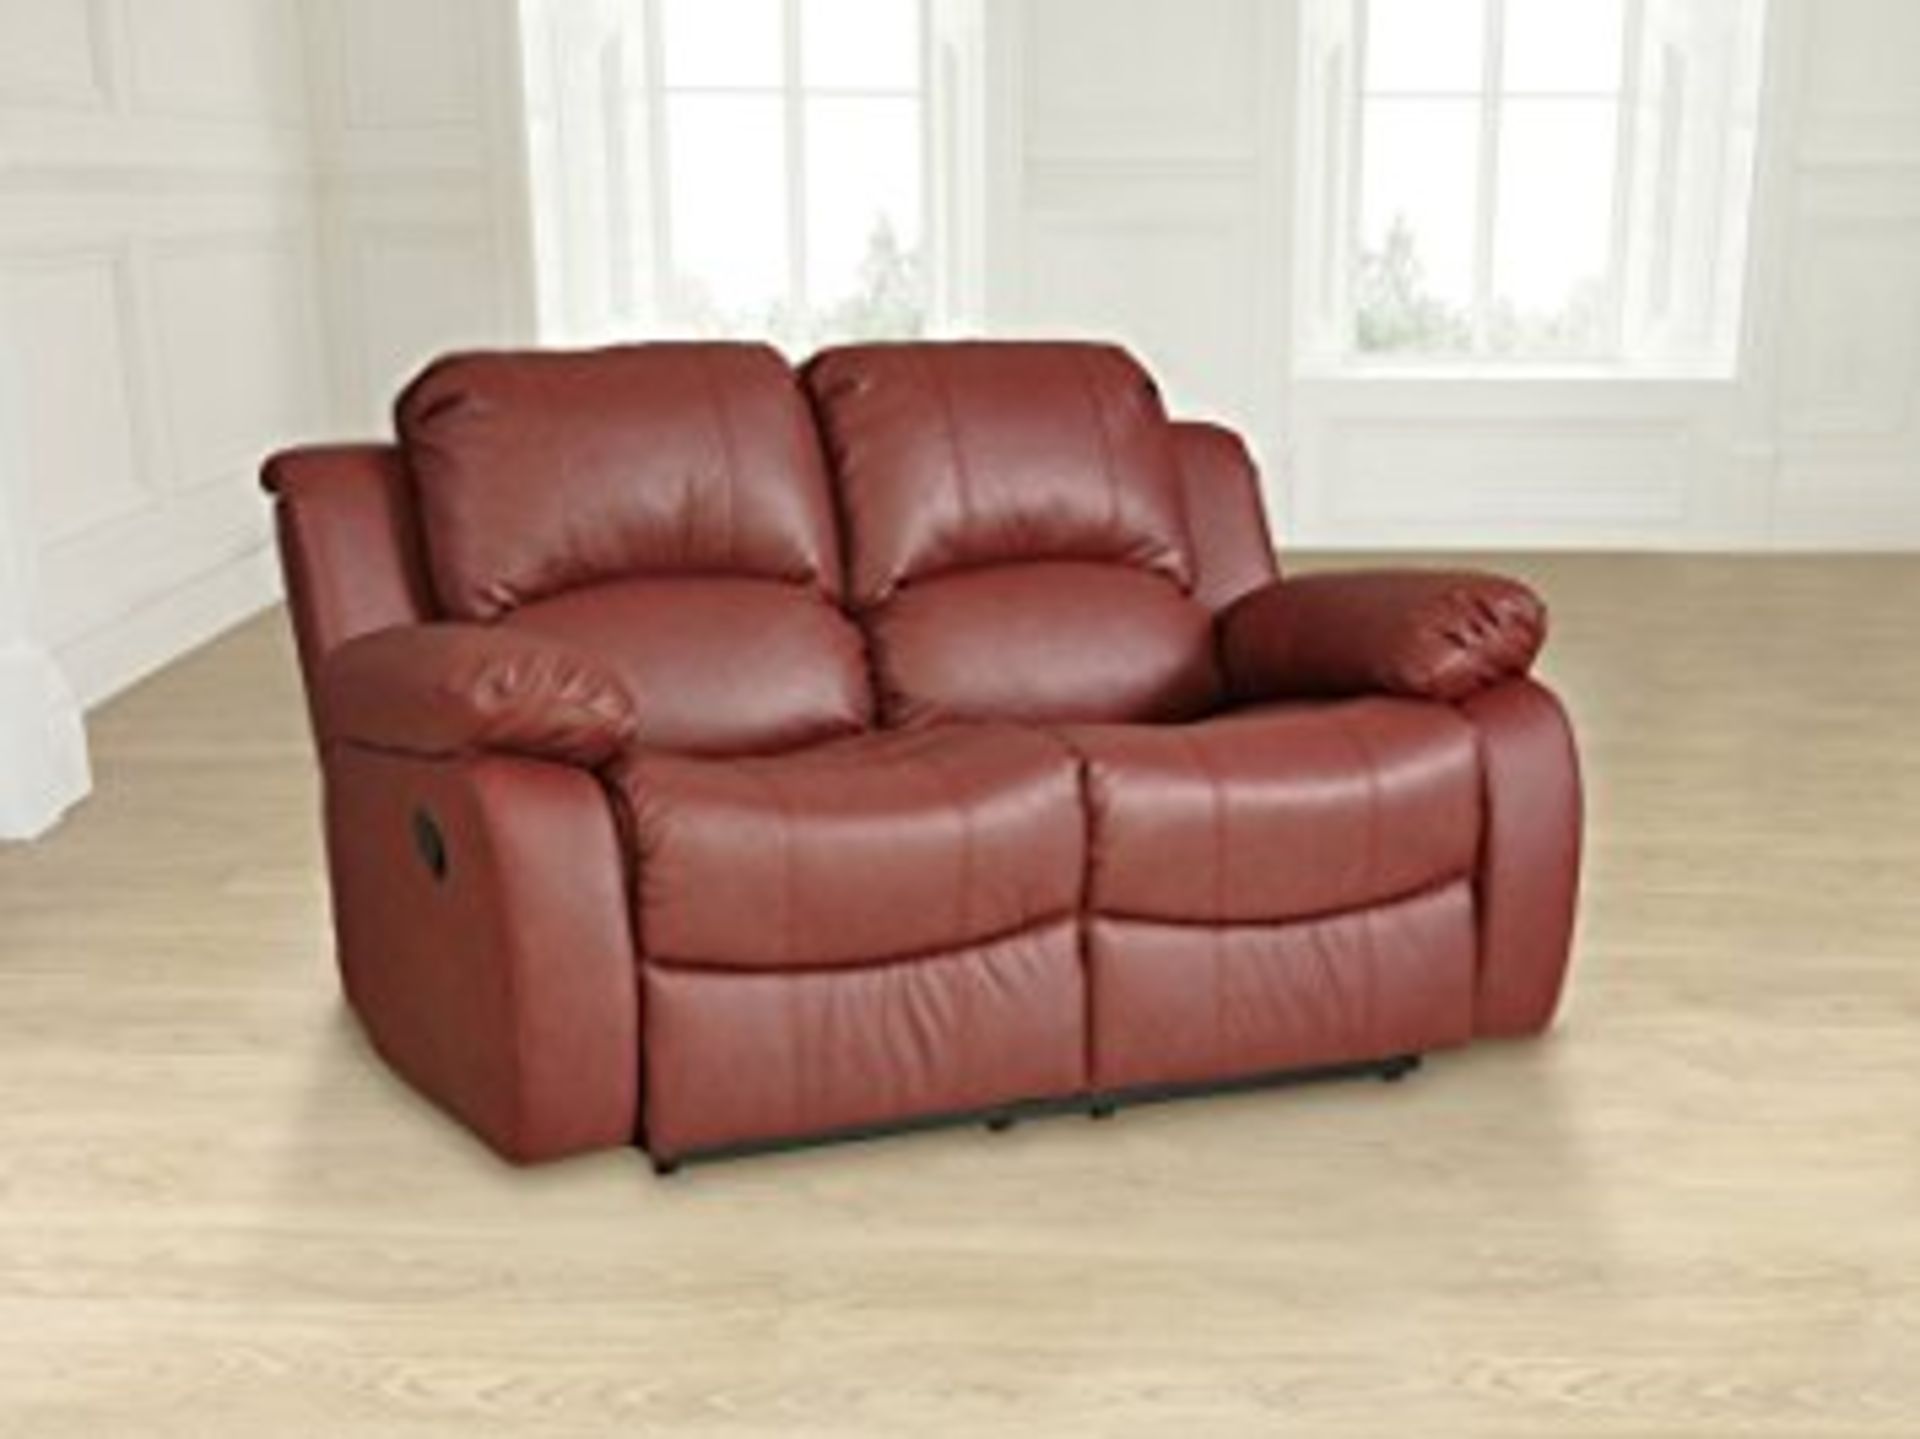 Supreme Valance burgandy leather 3 seater reclining sofa - Image 2 of 2